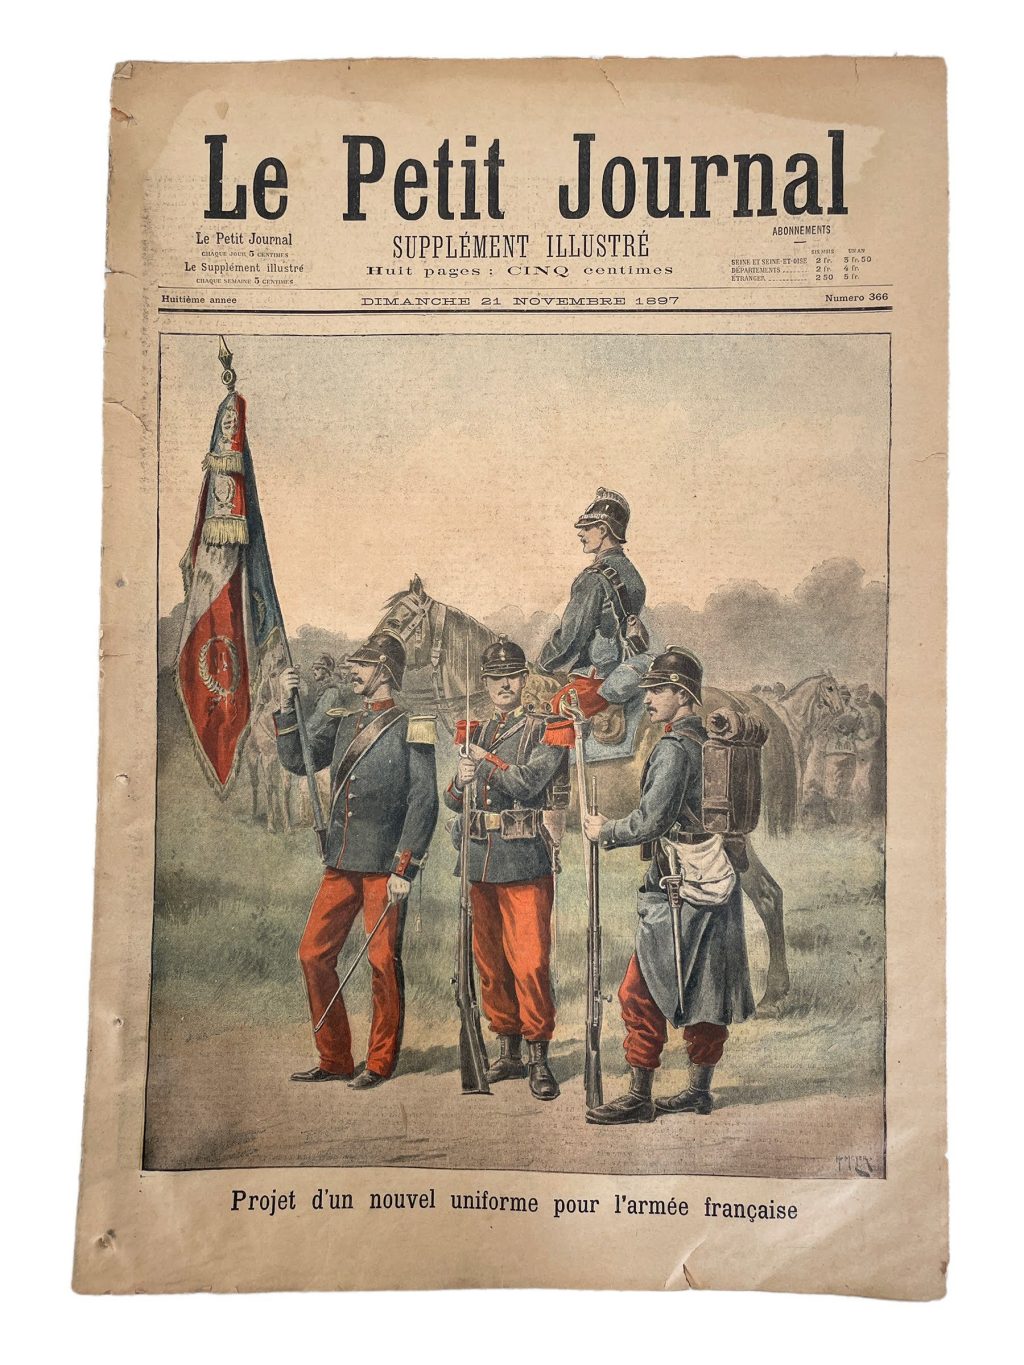 Antique French Le Petit Journal Newspaper Supplement Illustre Number 366 21/11/1897 Illustrations 8 Pages Memorabilia Collector c1897